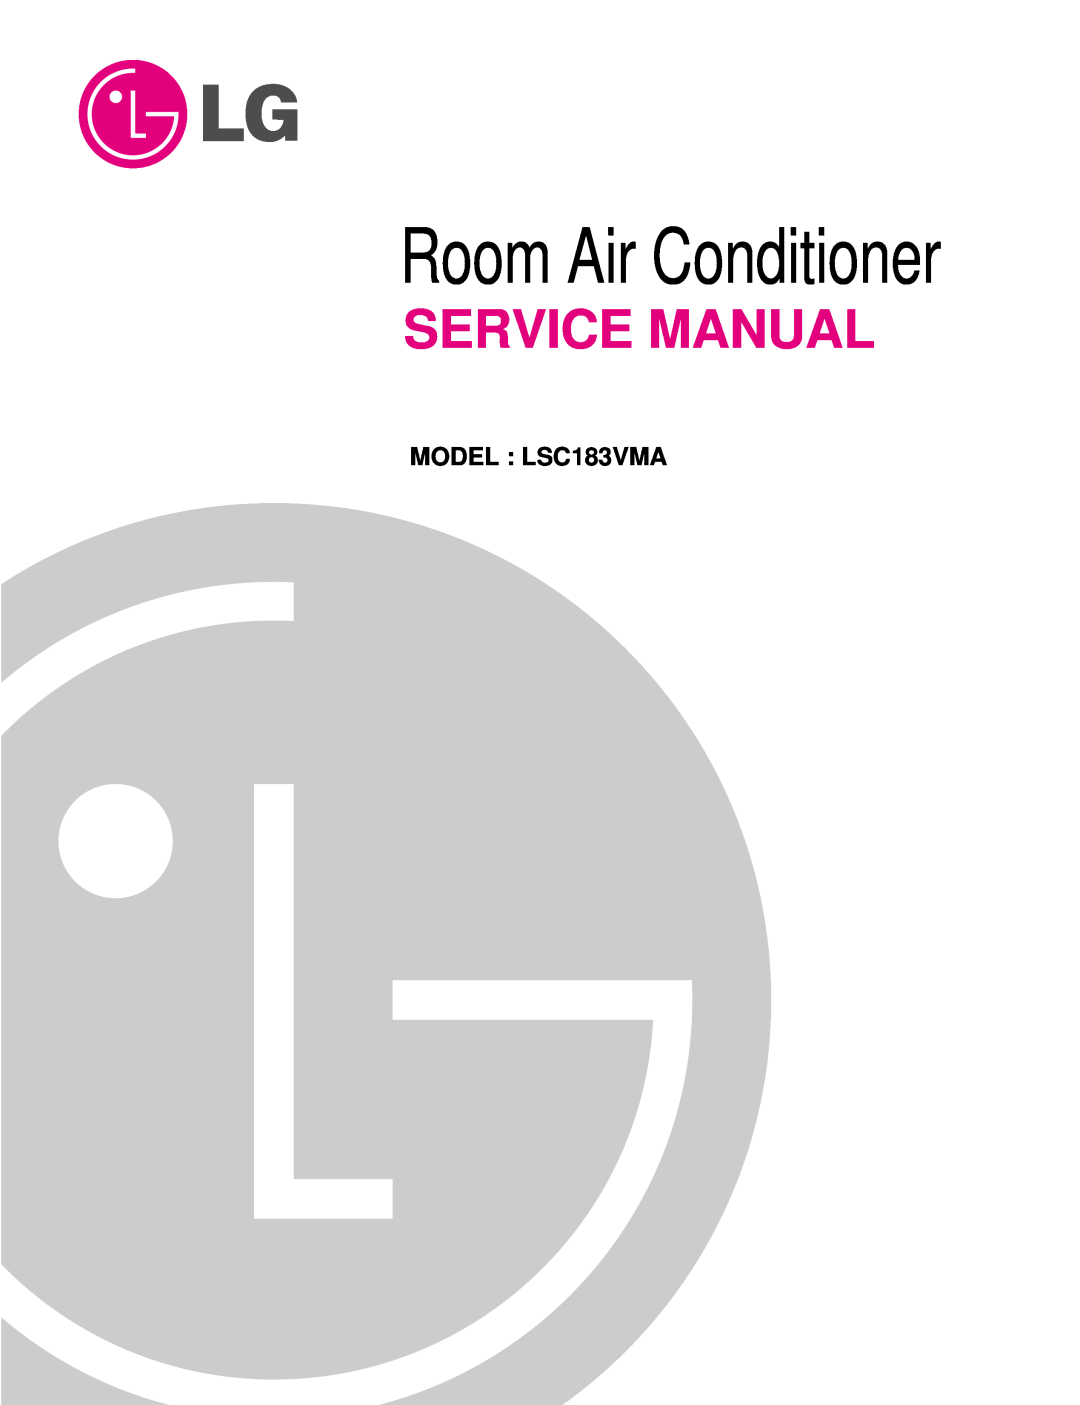 LG Electronics service manual MODEL LSC183VMA, Room Air Conditioner, Service Manual 